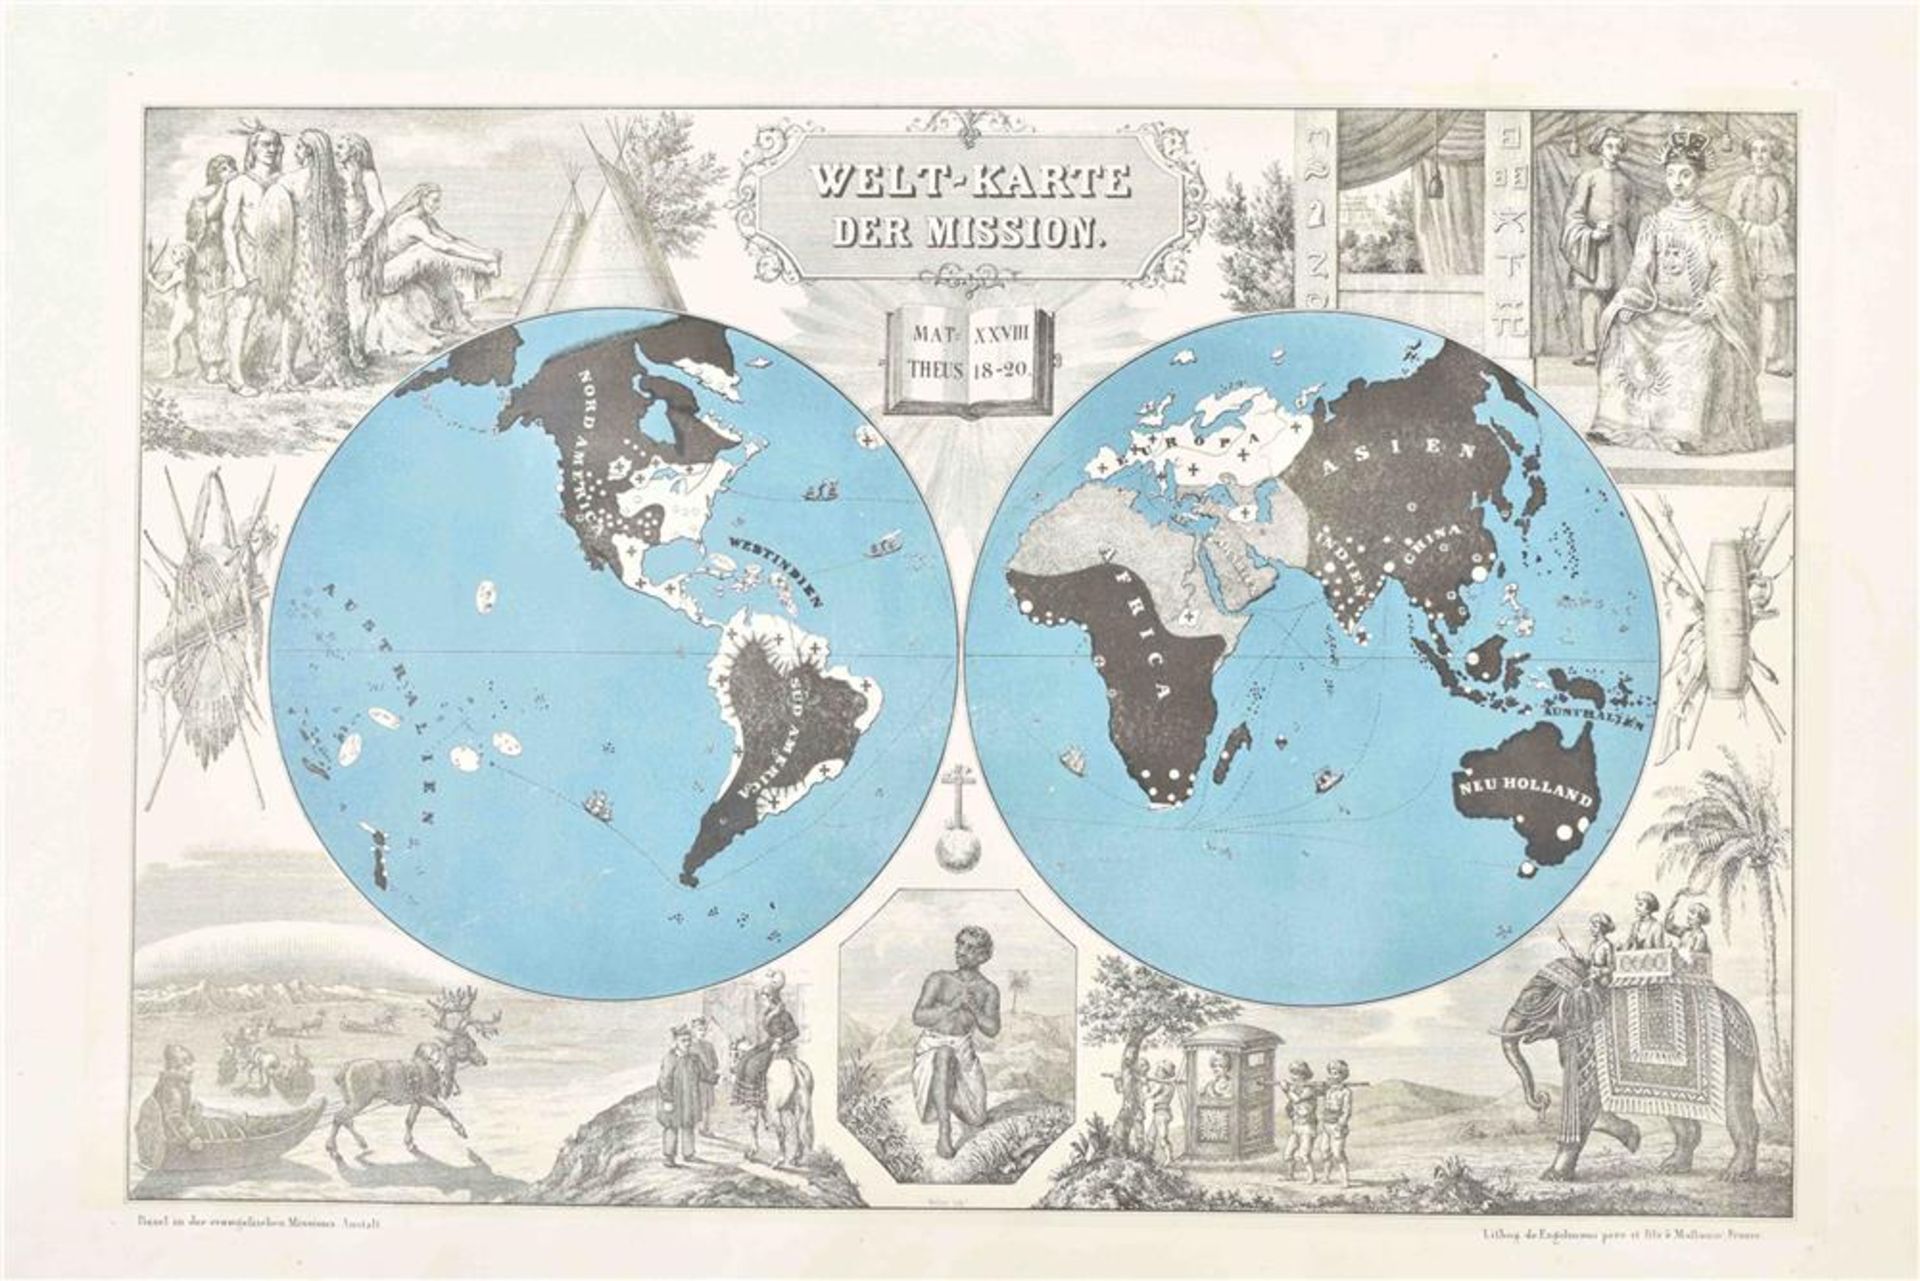 [World] (1) Missions-Weltkarte, lith. E. Kaufmann, Lahr. Basel Verlag der Missionsbuchhandlung - Image 5 of 7